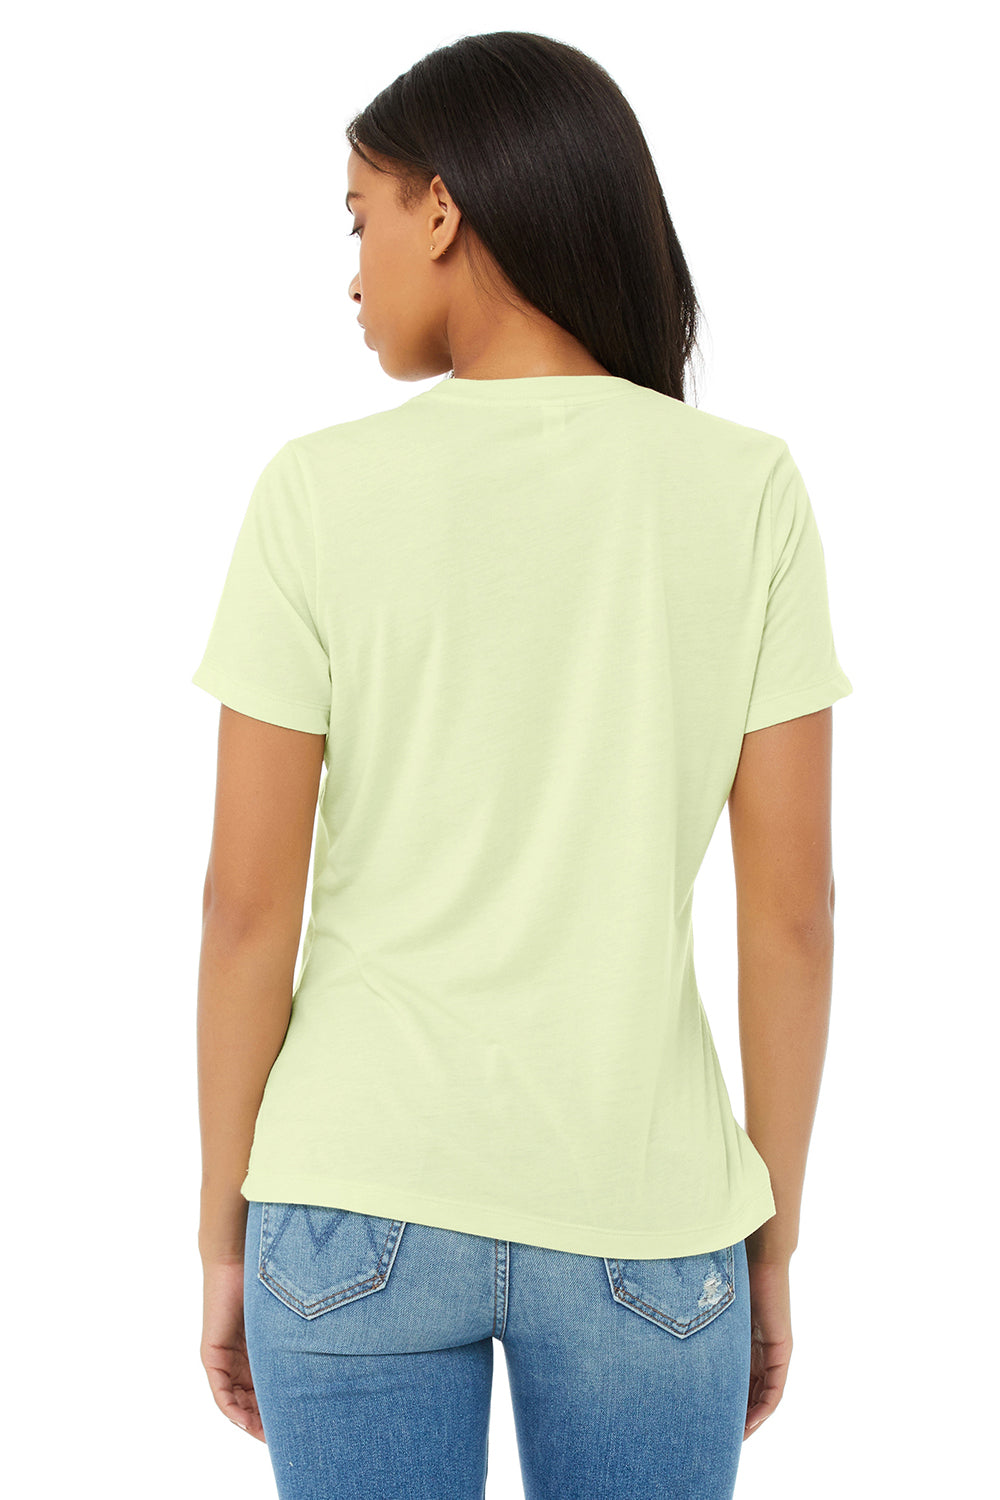 Bella + Canvas BC6413 Womens Short Sleeve Crewneck T-Shirt Spring Green Model Back